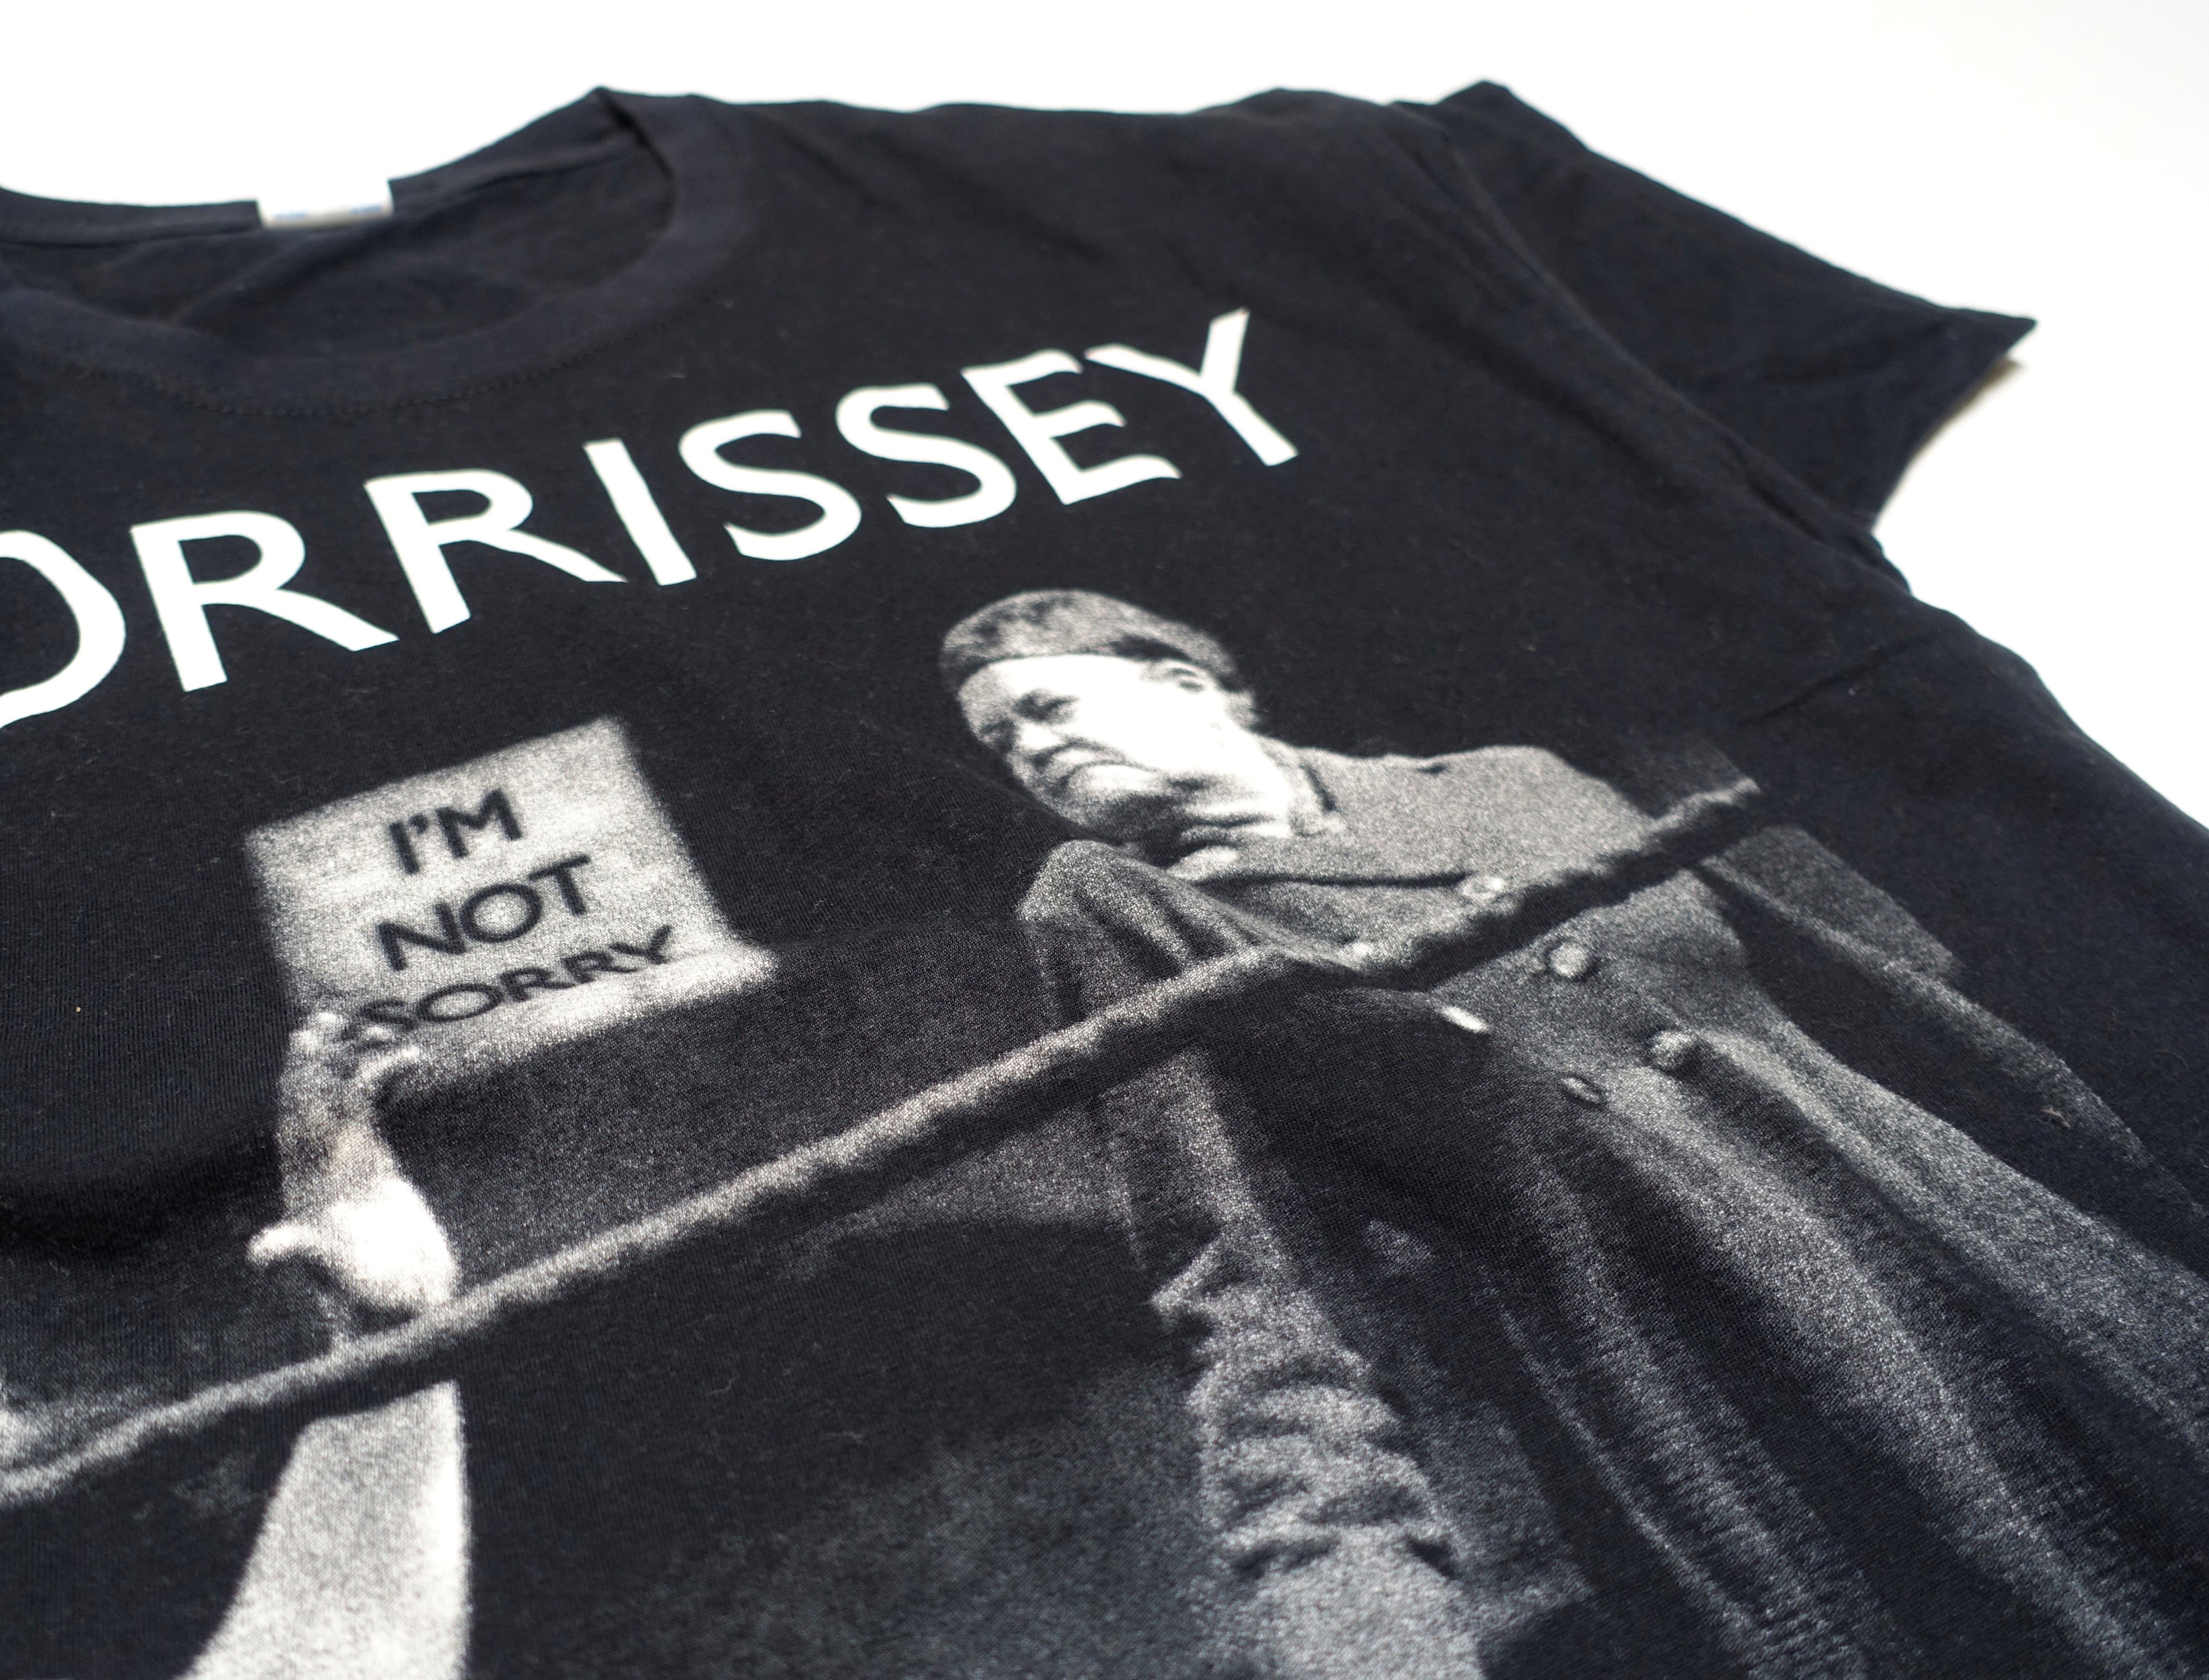 Morrissey - I'm Not Sorry Wrestler Tour Shirt Size Large